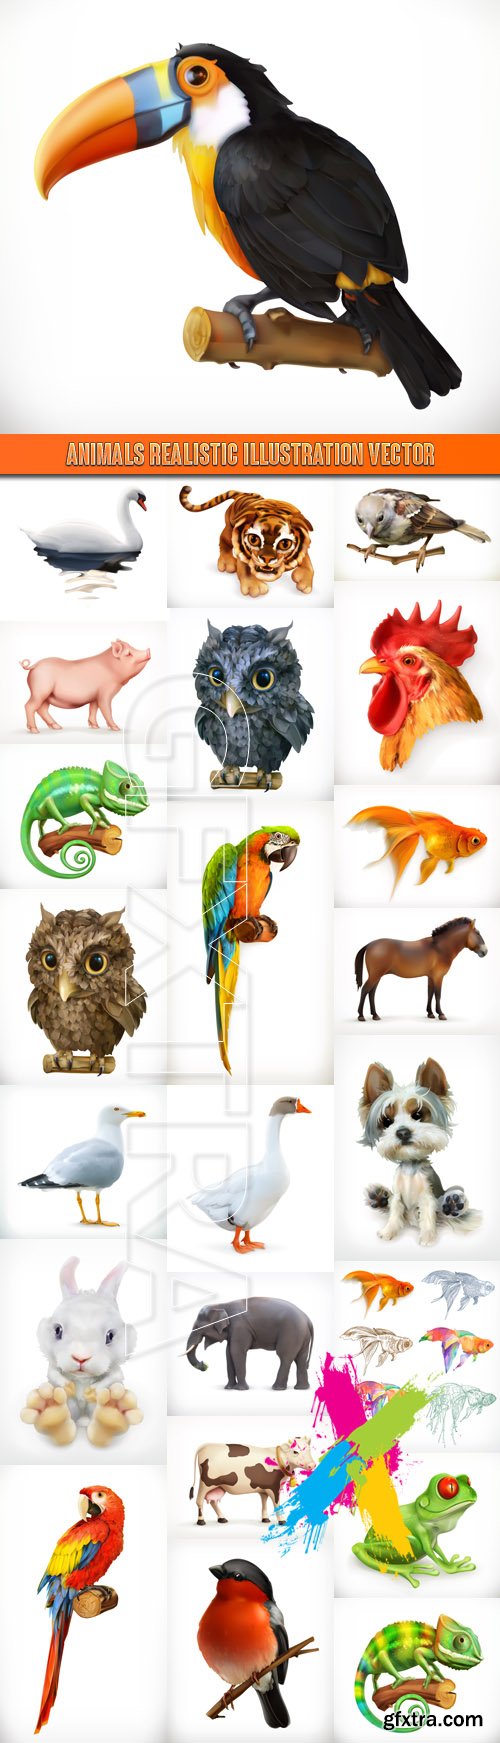 Animals realistic illustration vector